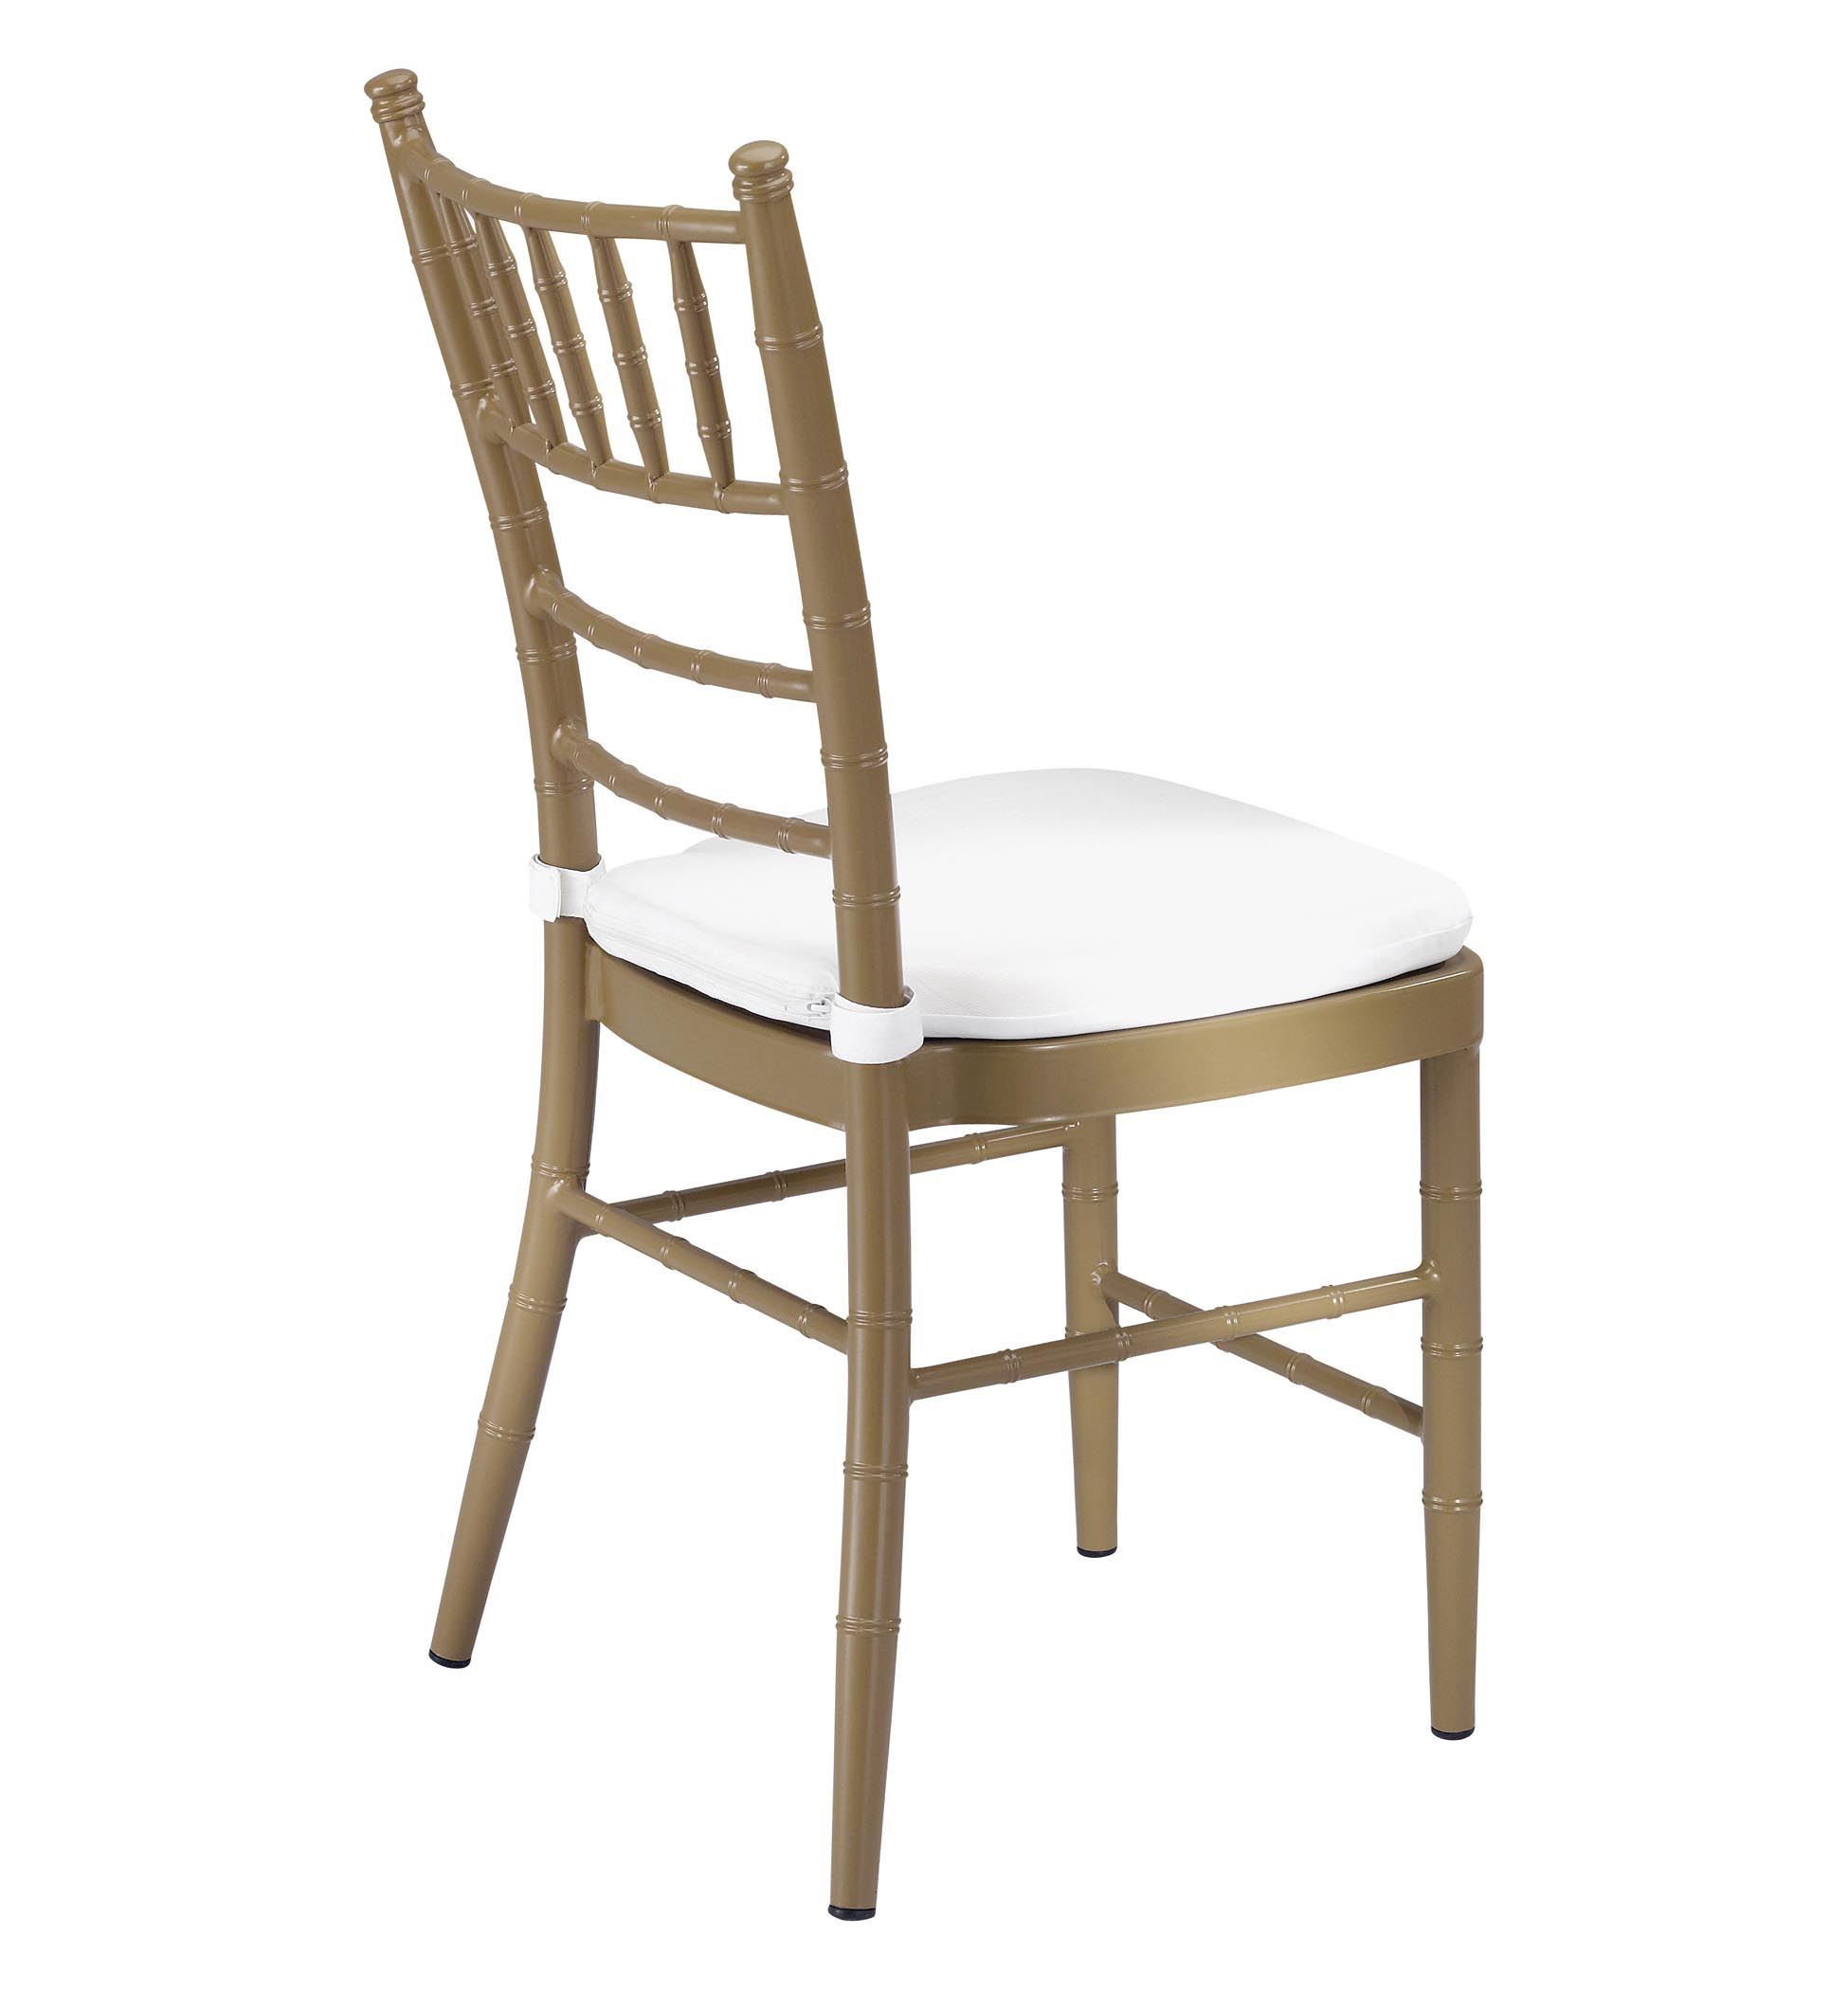 Chivari 8670 Aluminum Stacking Banquet Chair